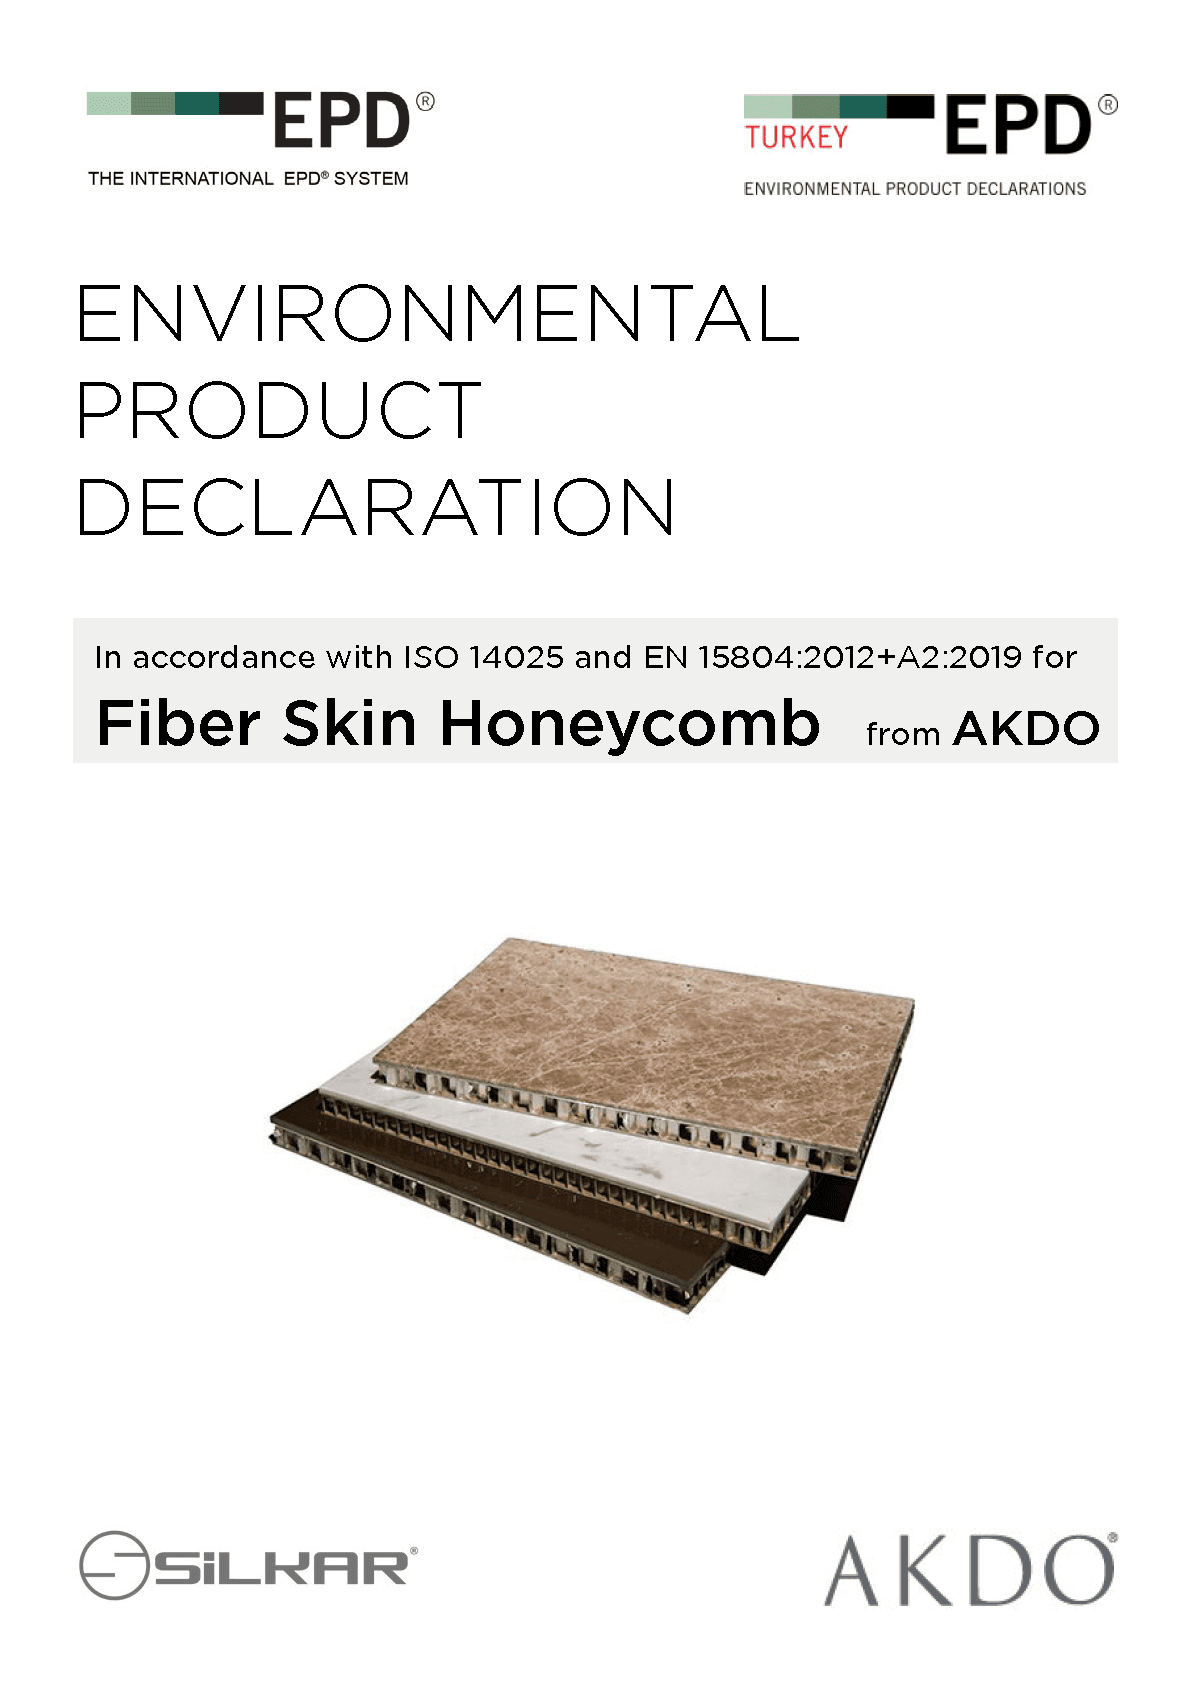 Fiber Skin Honeycomb